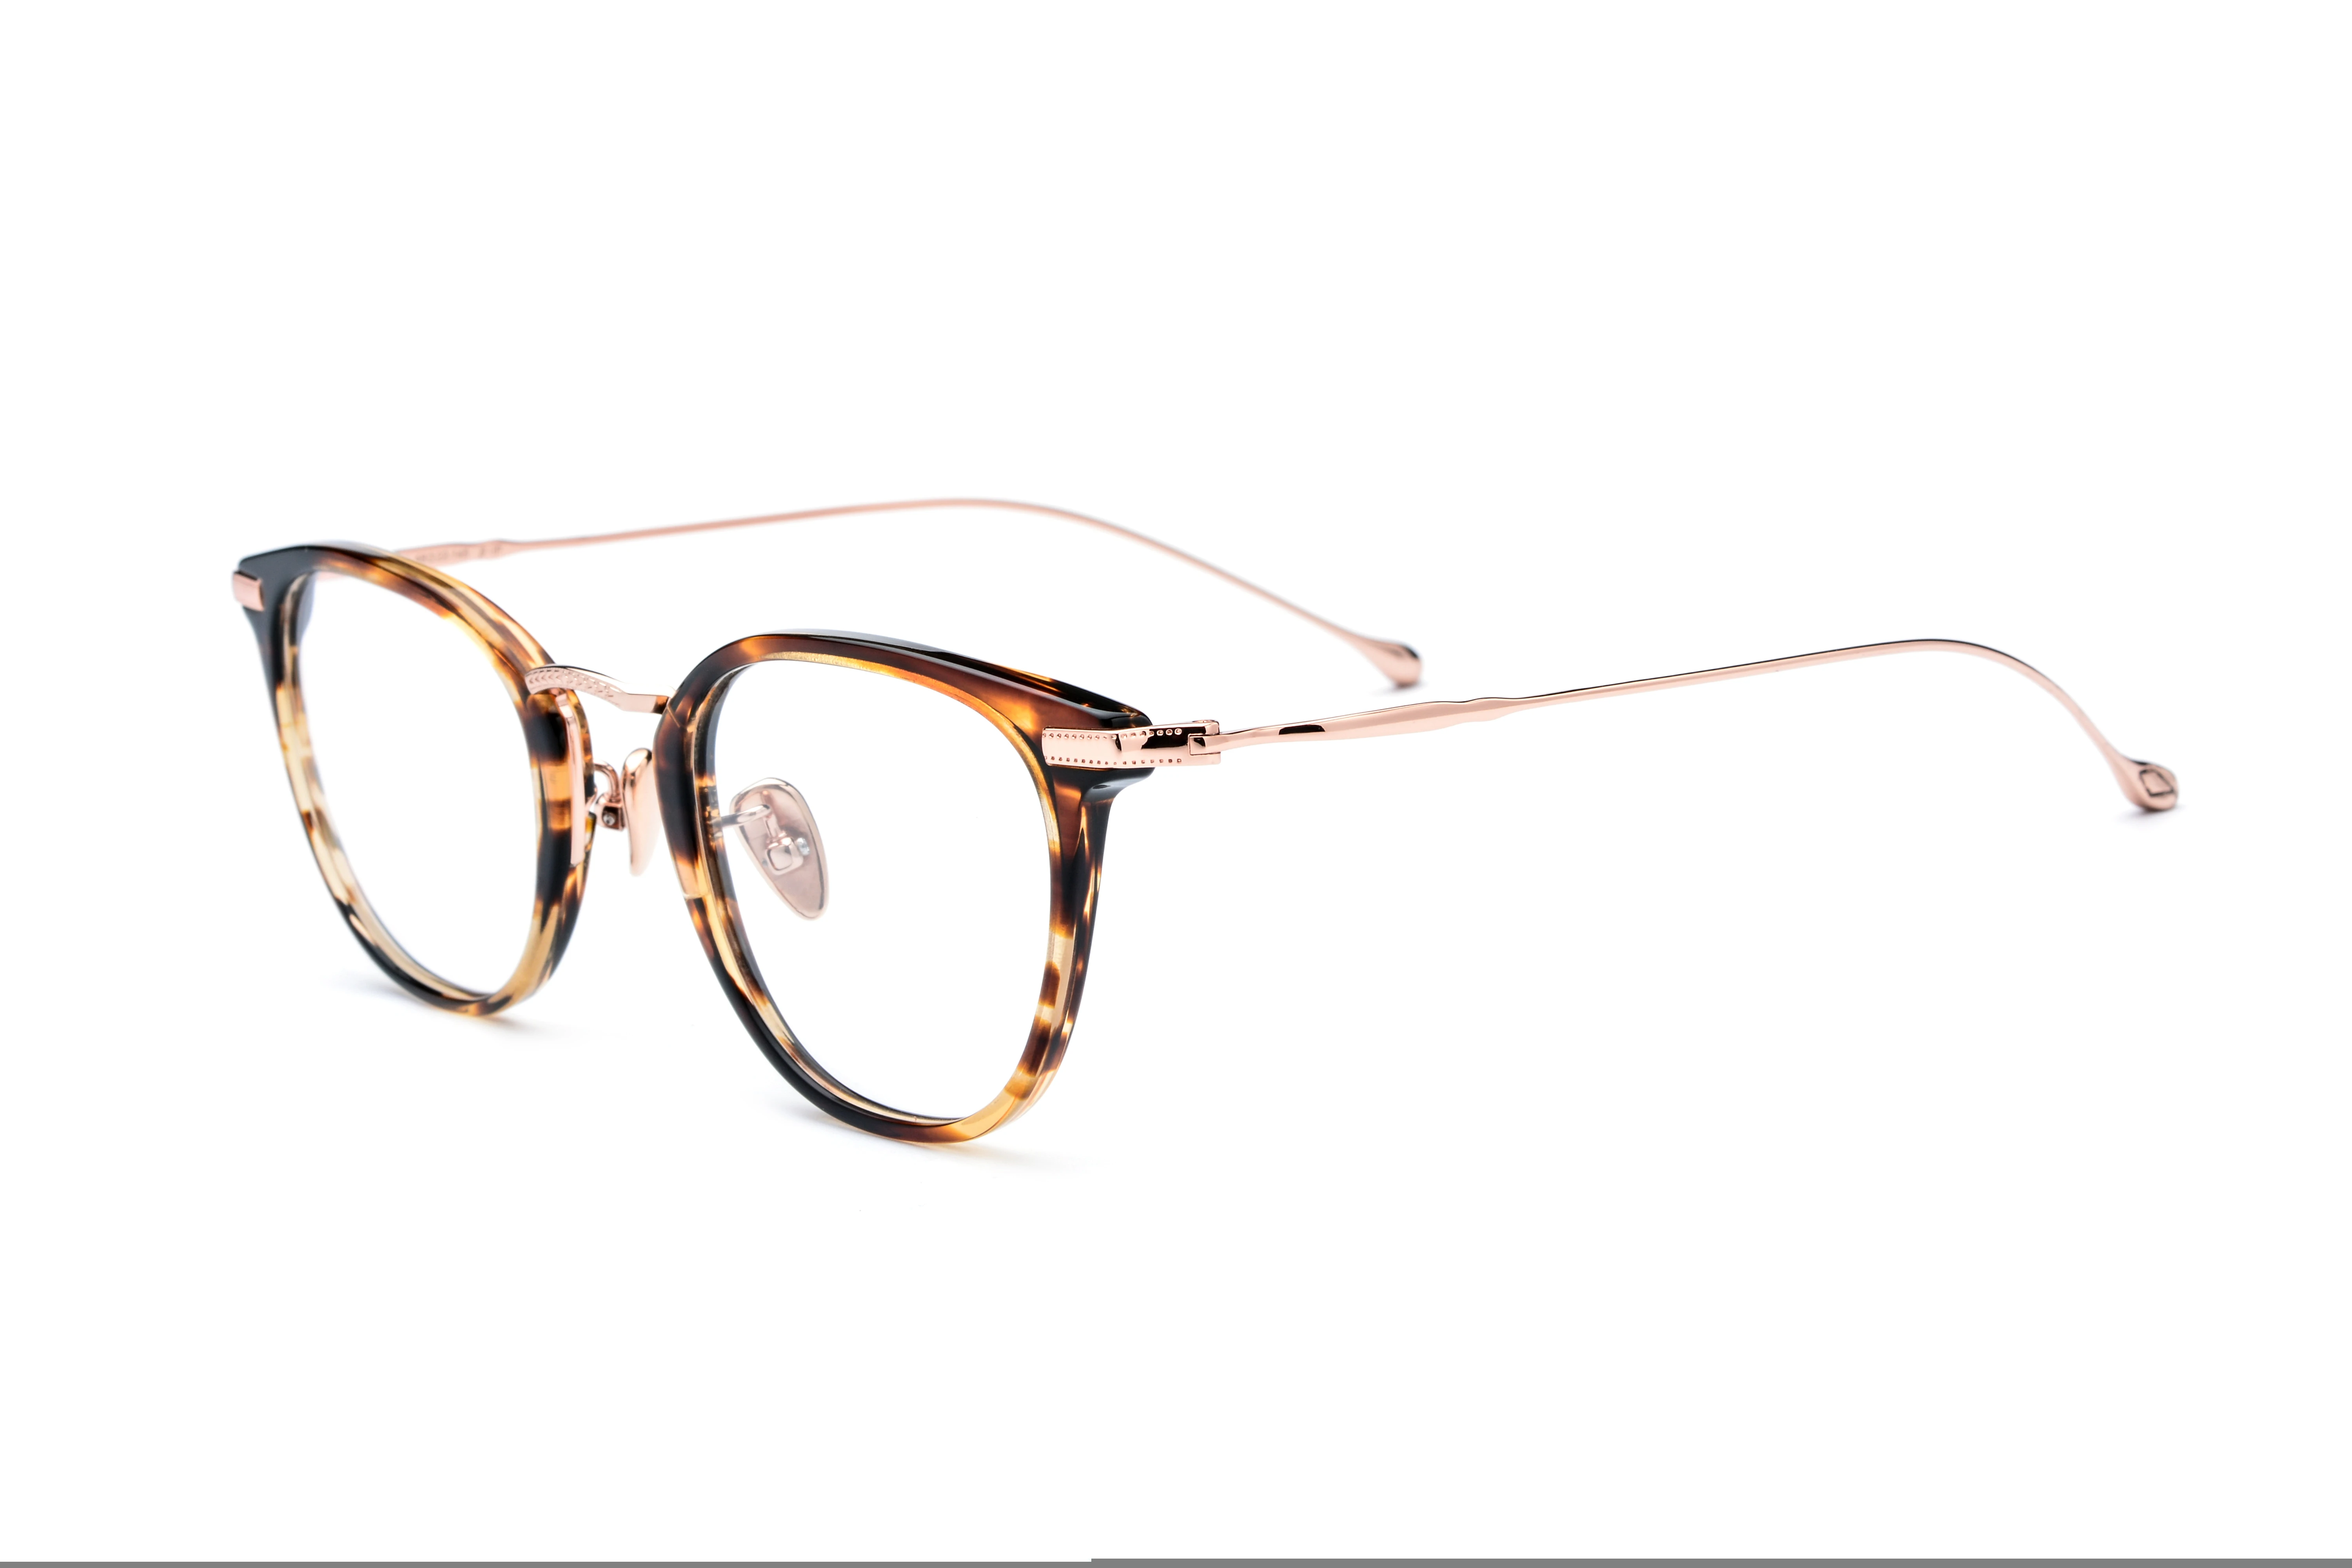 Jheyewear beta titanium temples acetate frame tortoise colorful round classic high end glasses frames